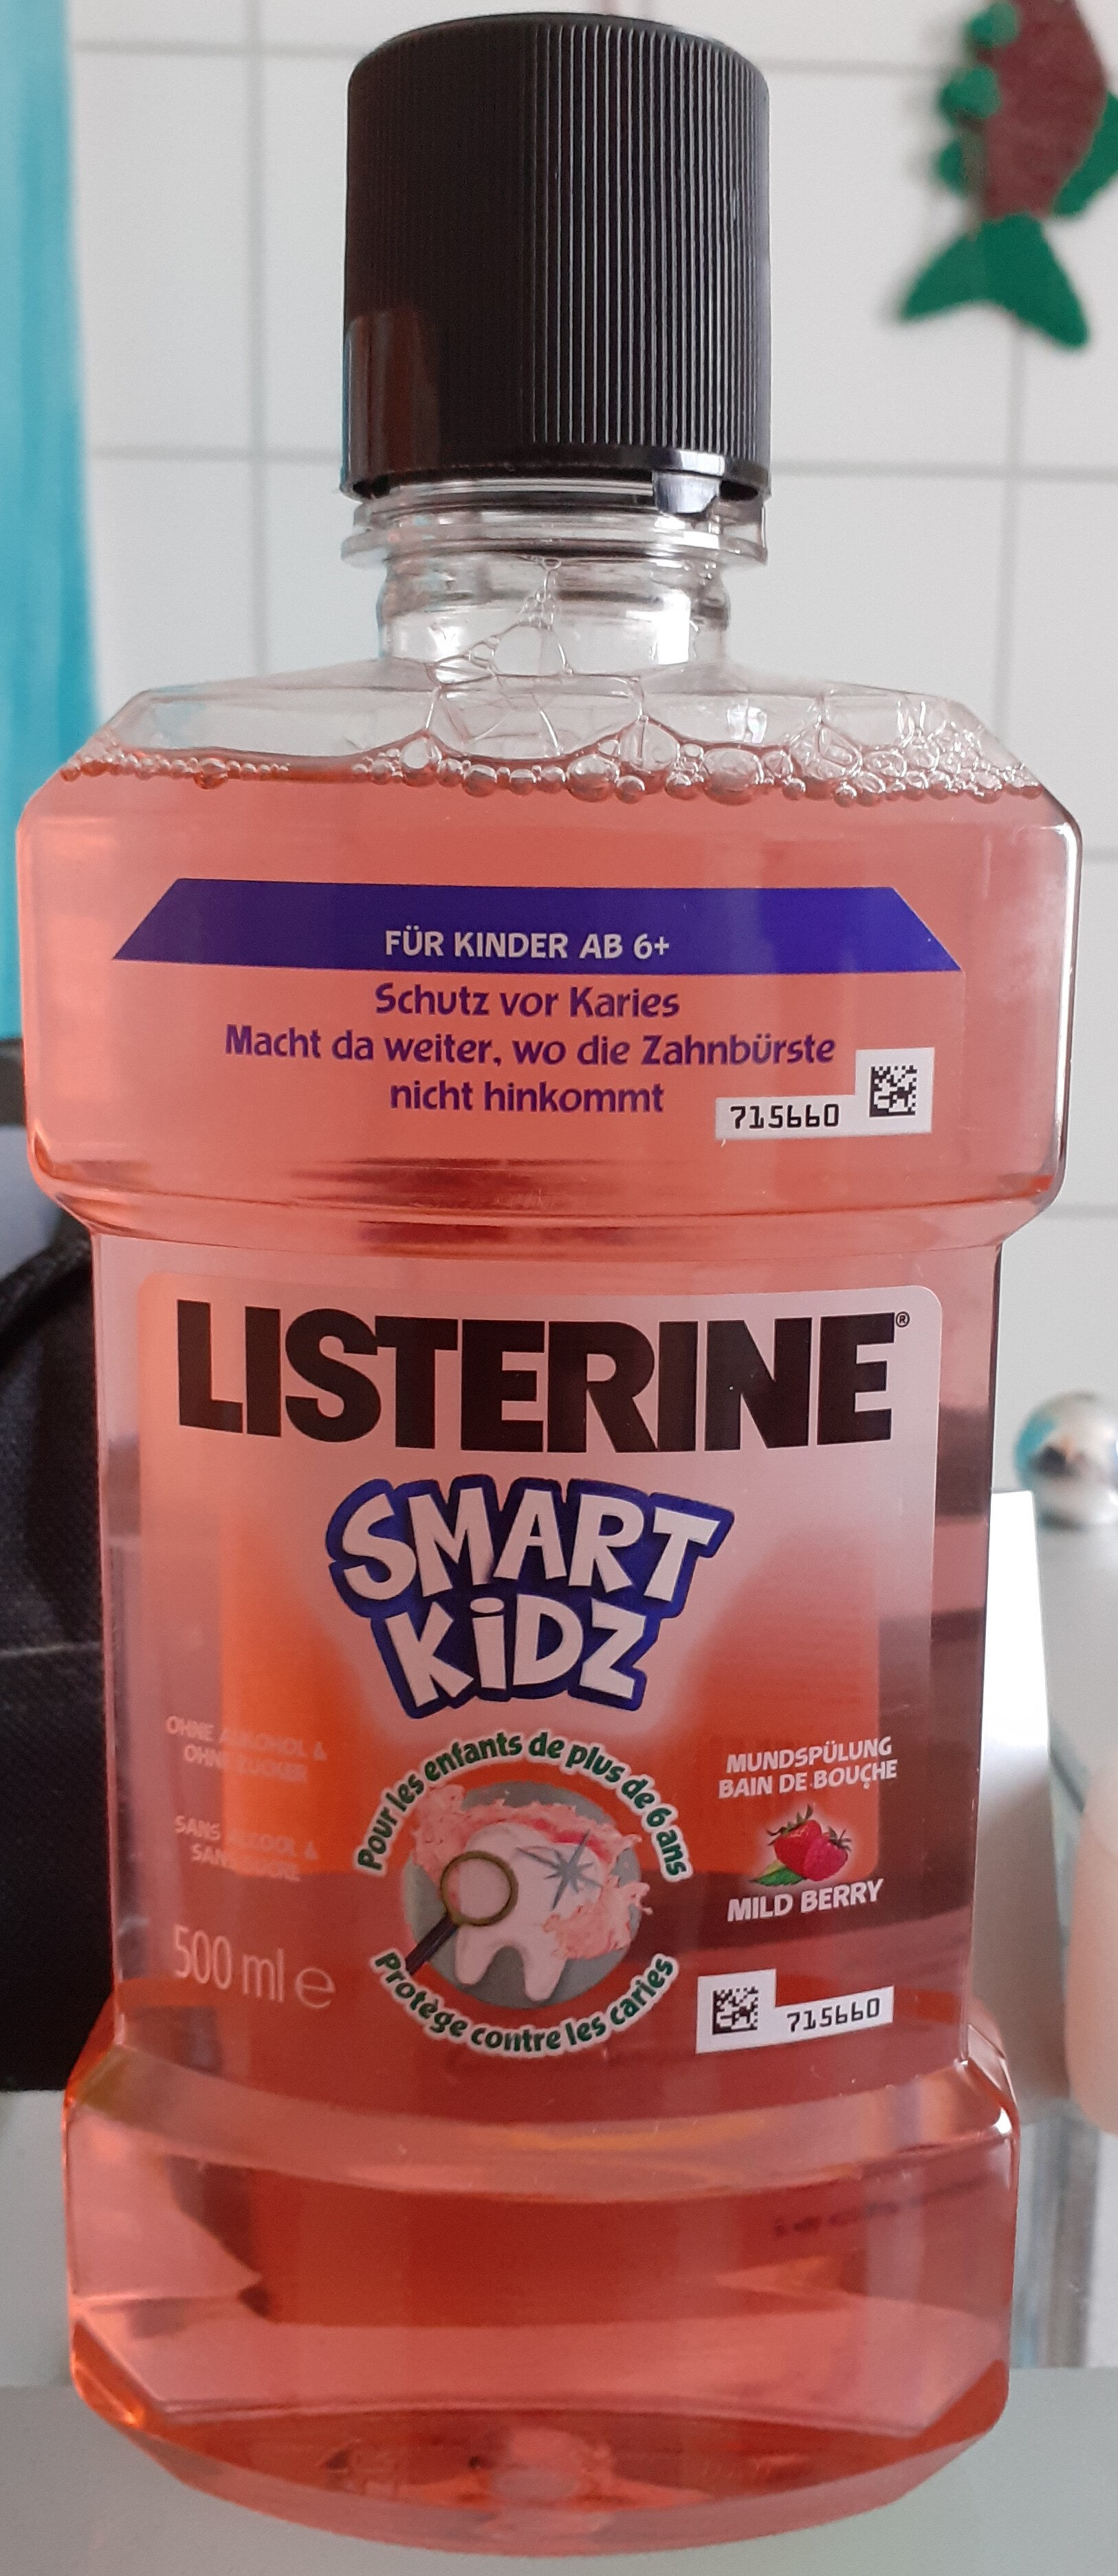 Smart Kidz - Produit - de